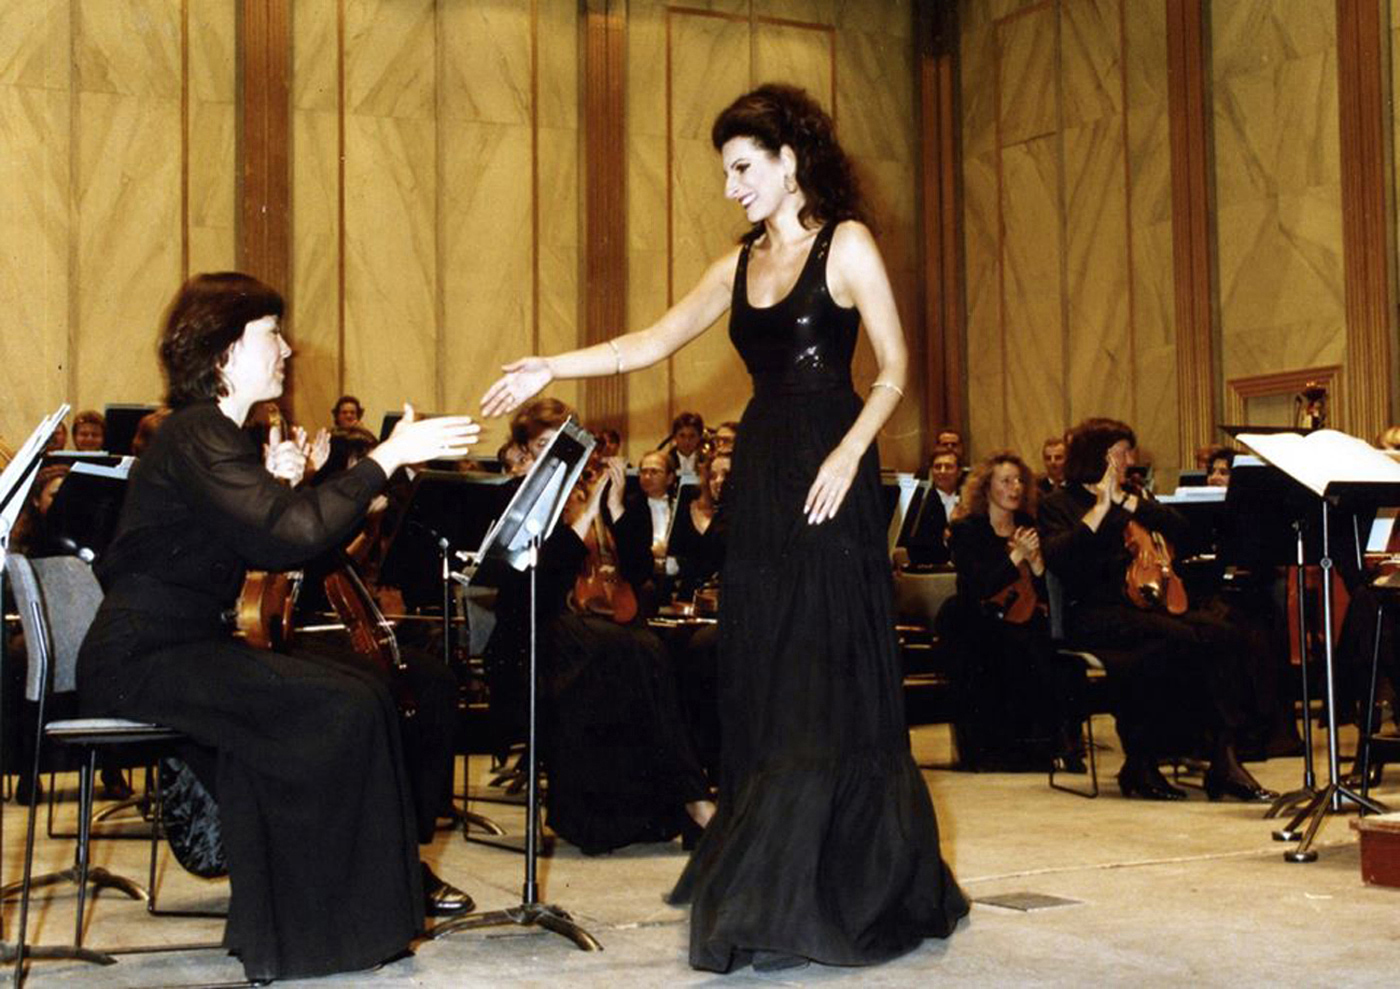 Lucia Aliberti congratulated the Concert Master⚘Concert⚘Théatre des Champs-Elyseés⚘Paris⚘Orchestra Colonne⚘On Stage⚘La Perla Fashion⚘:http://www.luciaaliberti.it #luciaaliberti #théatredeschampselyseés #orchestracolonne #paris #concert #laperlafashion #onstage